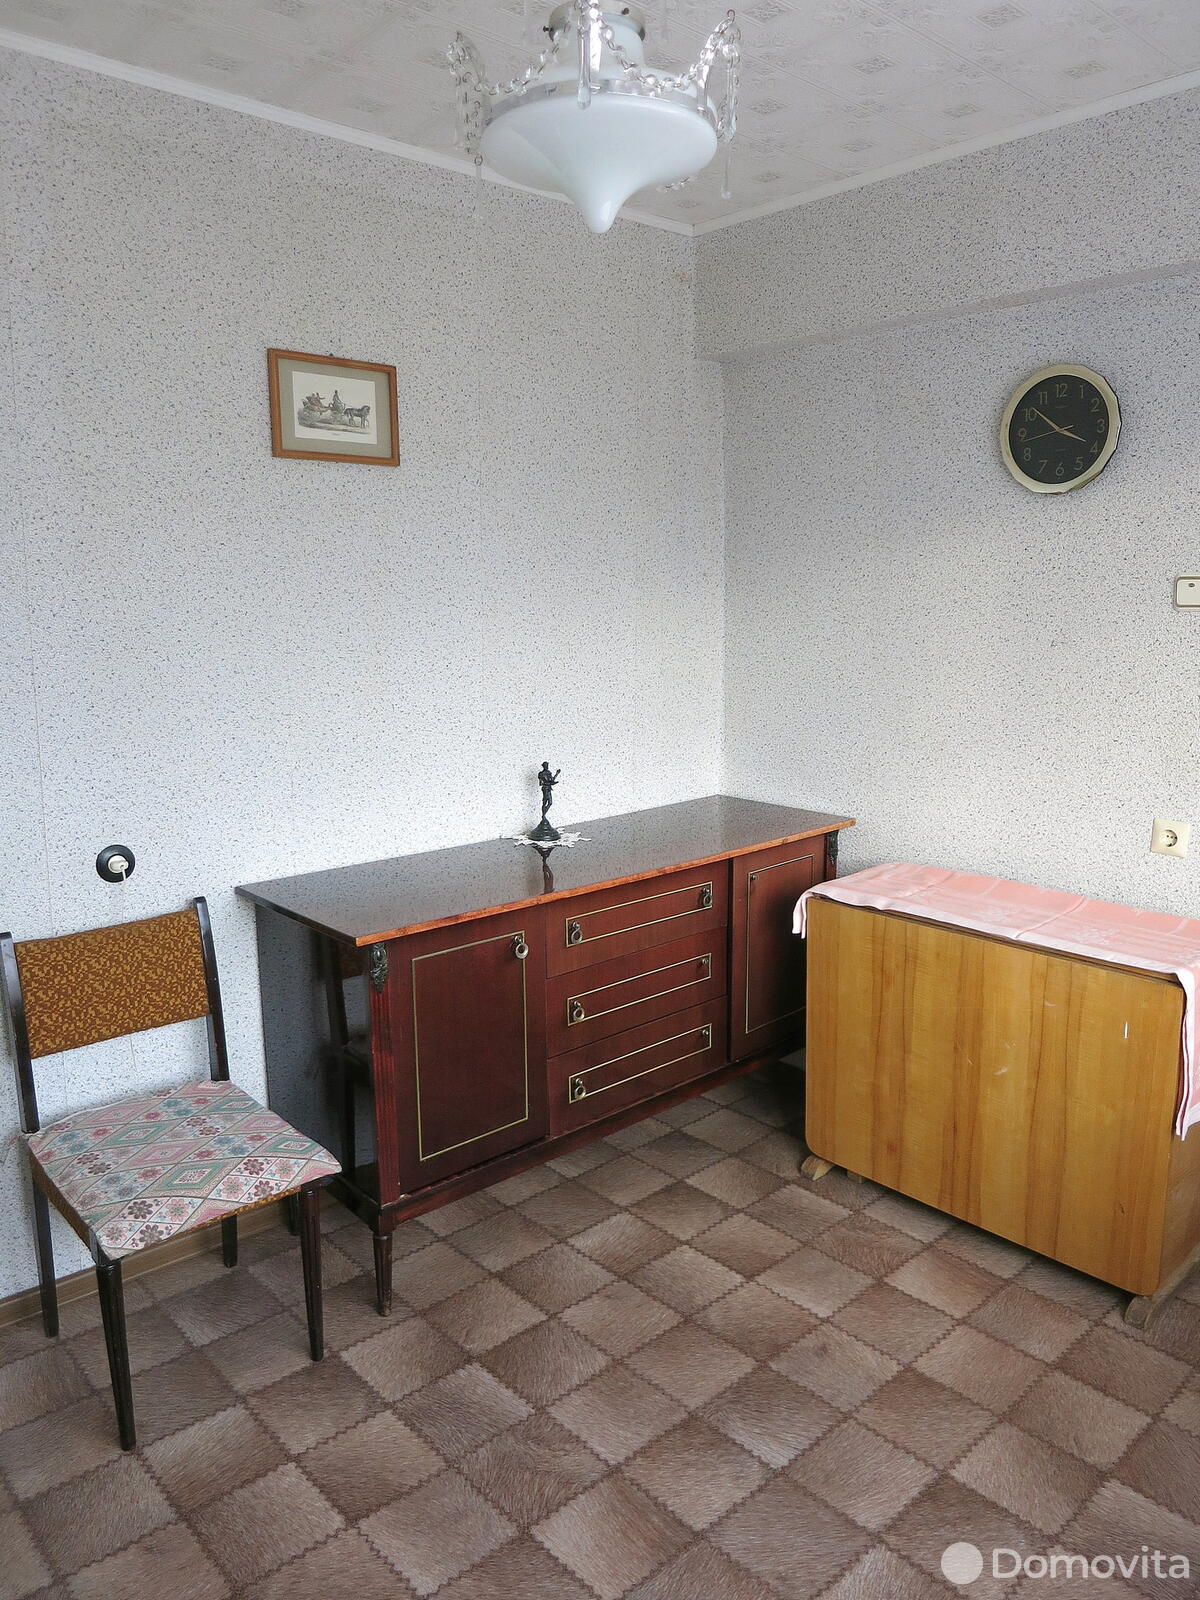 квартира, Минск, ул. Матусевича, д. 6, стоимость аренды 853 р./мес.